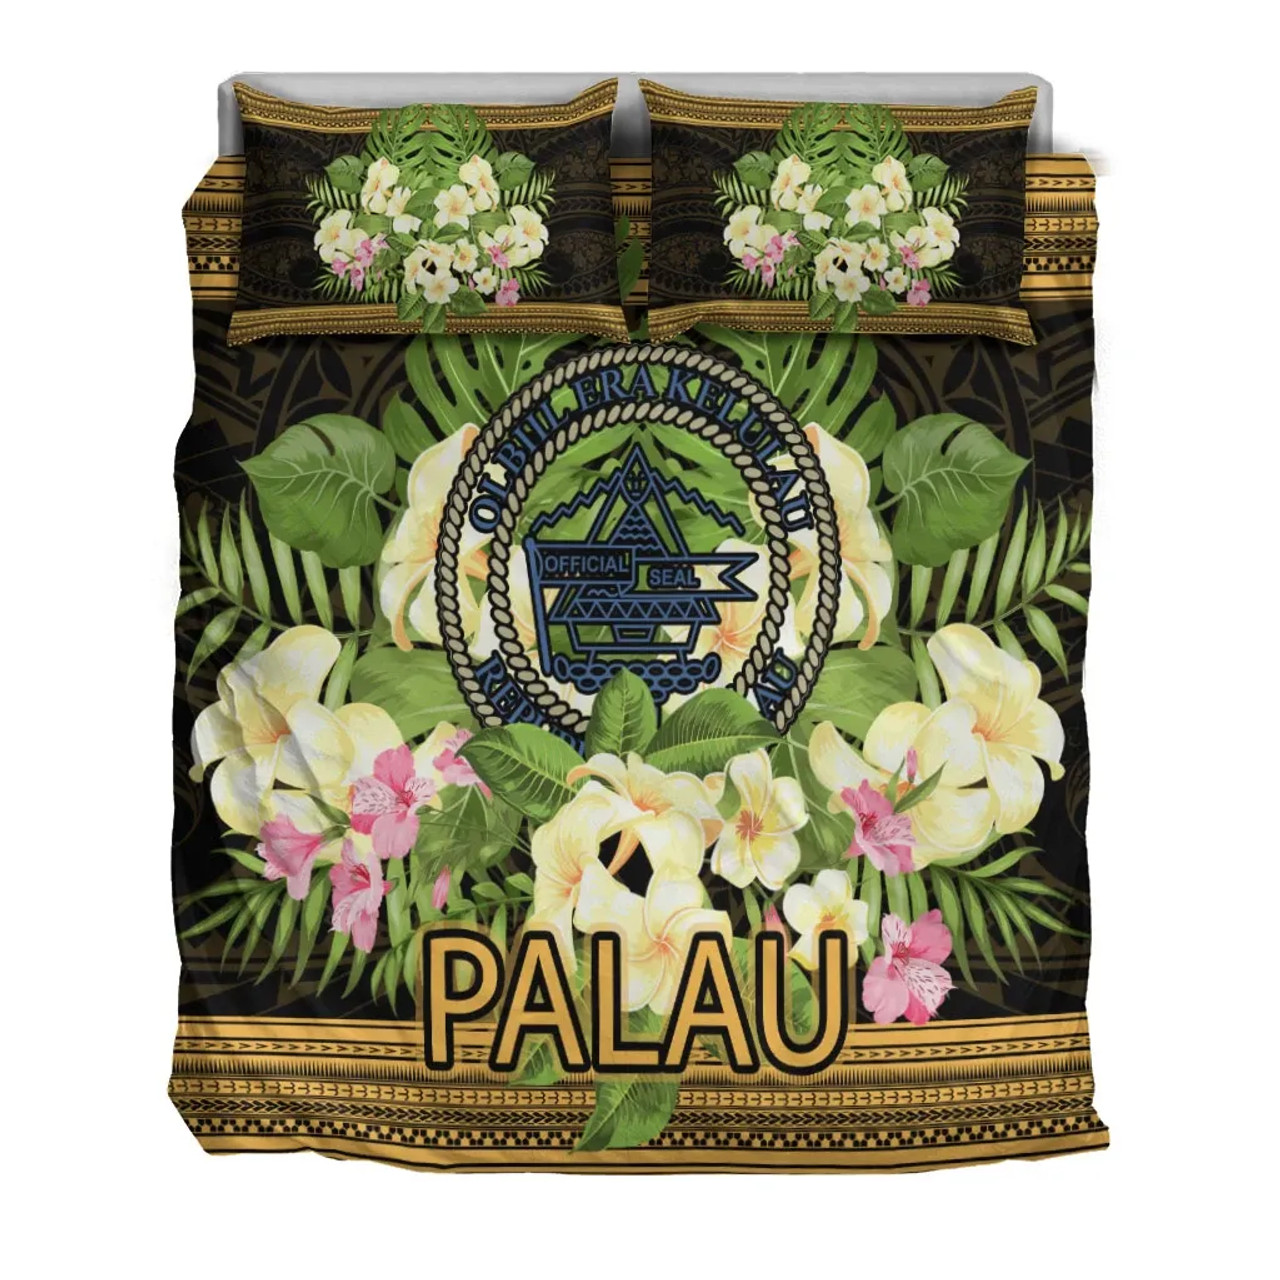 Palau Bedding Set - Polynesian Gold Patterns Collection 3